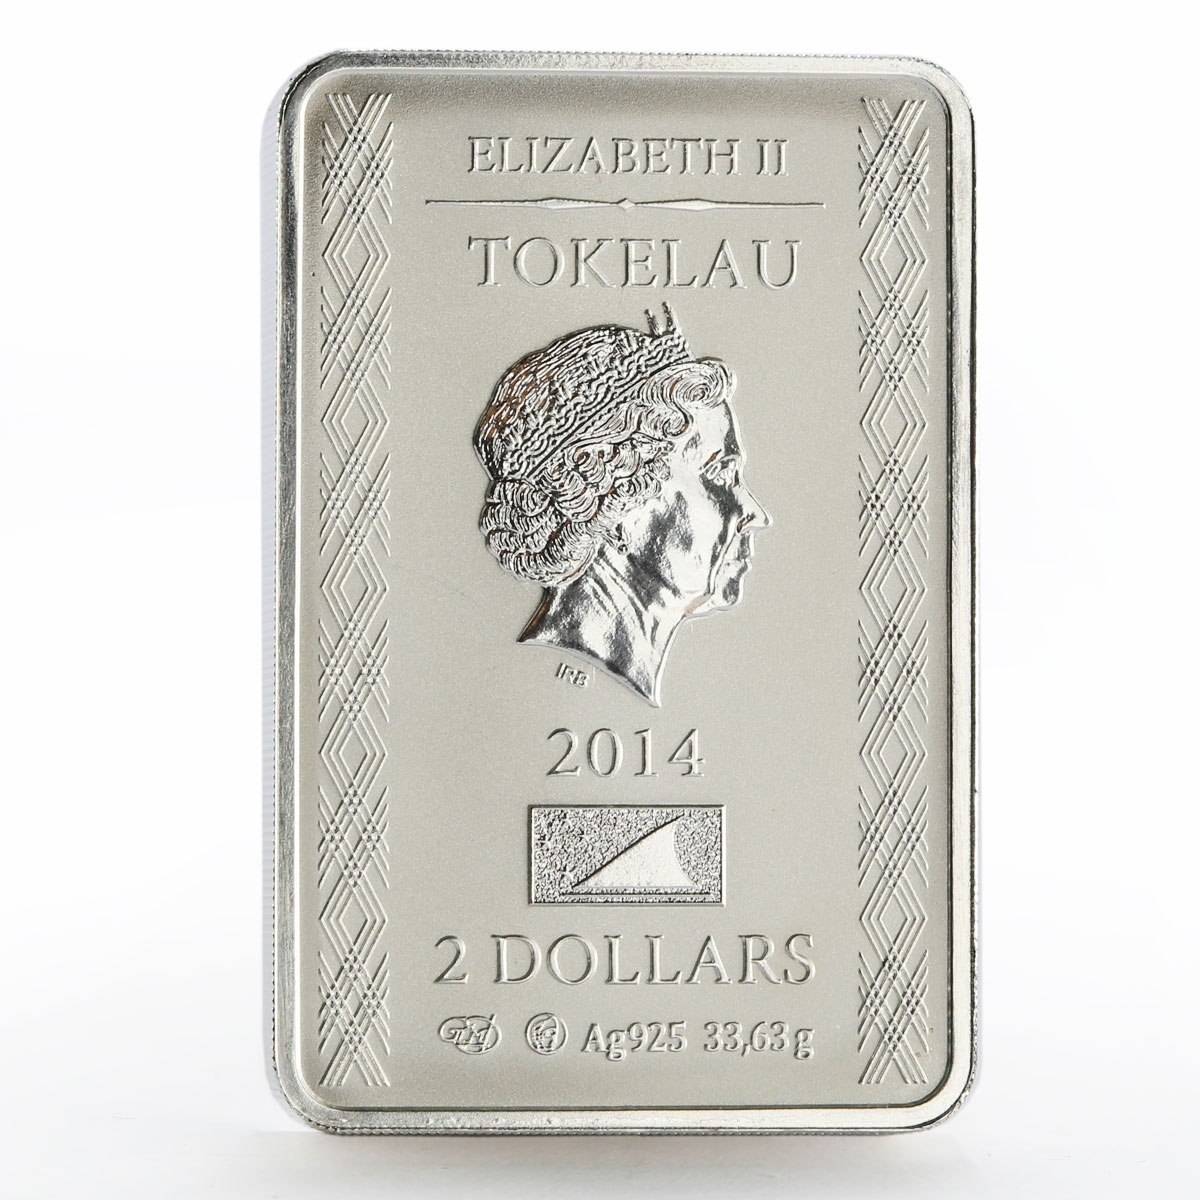 Tokelau 2 dollars Folk Crafts series Gzhel silver coin 2014